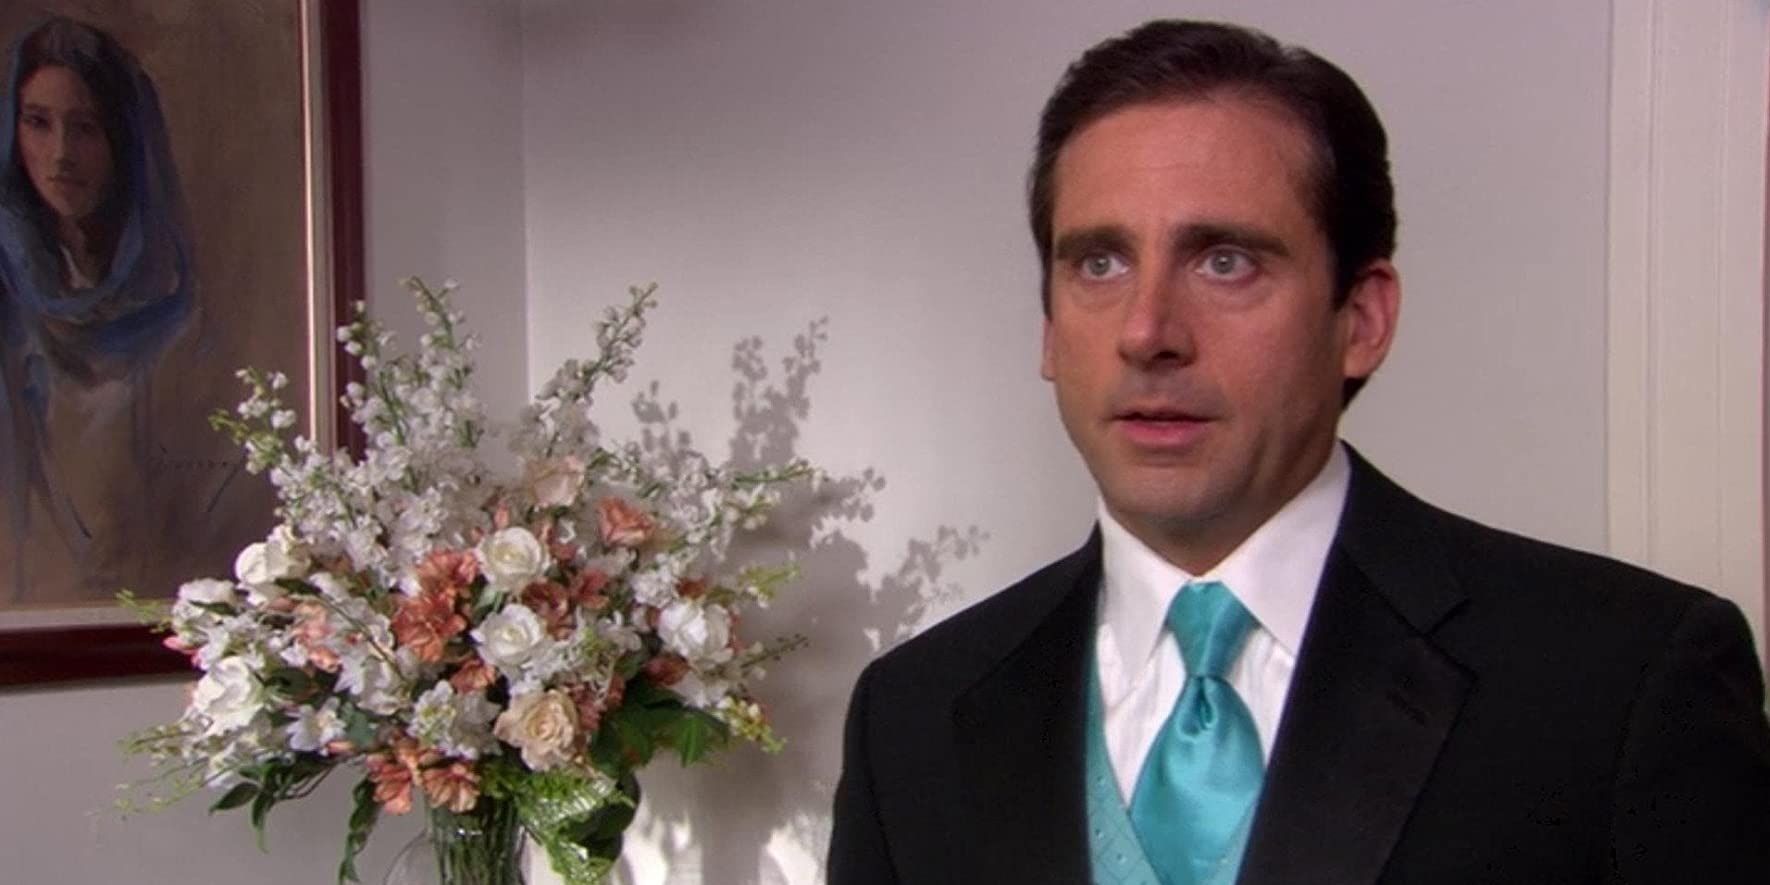 Michael Scott in The Office episode 'Phyllis' Wedding' wearing blue tie 